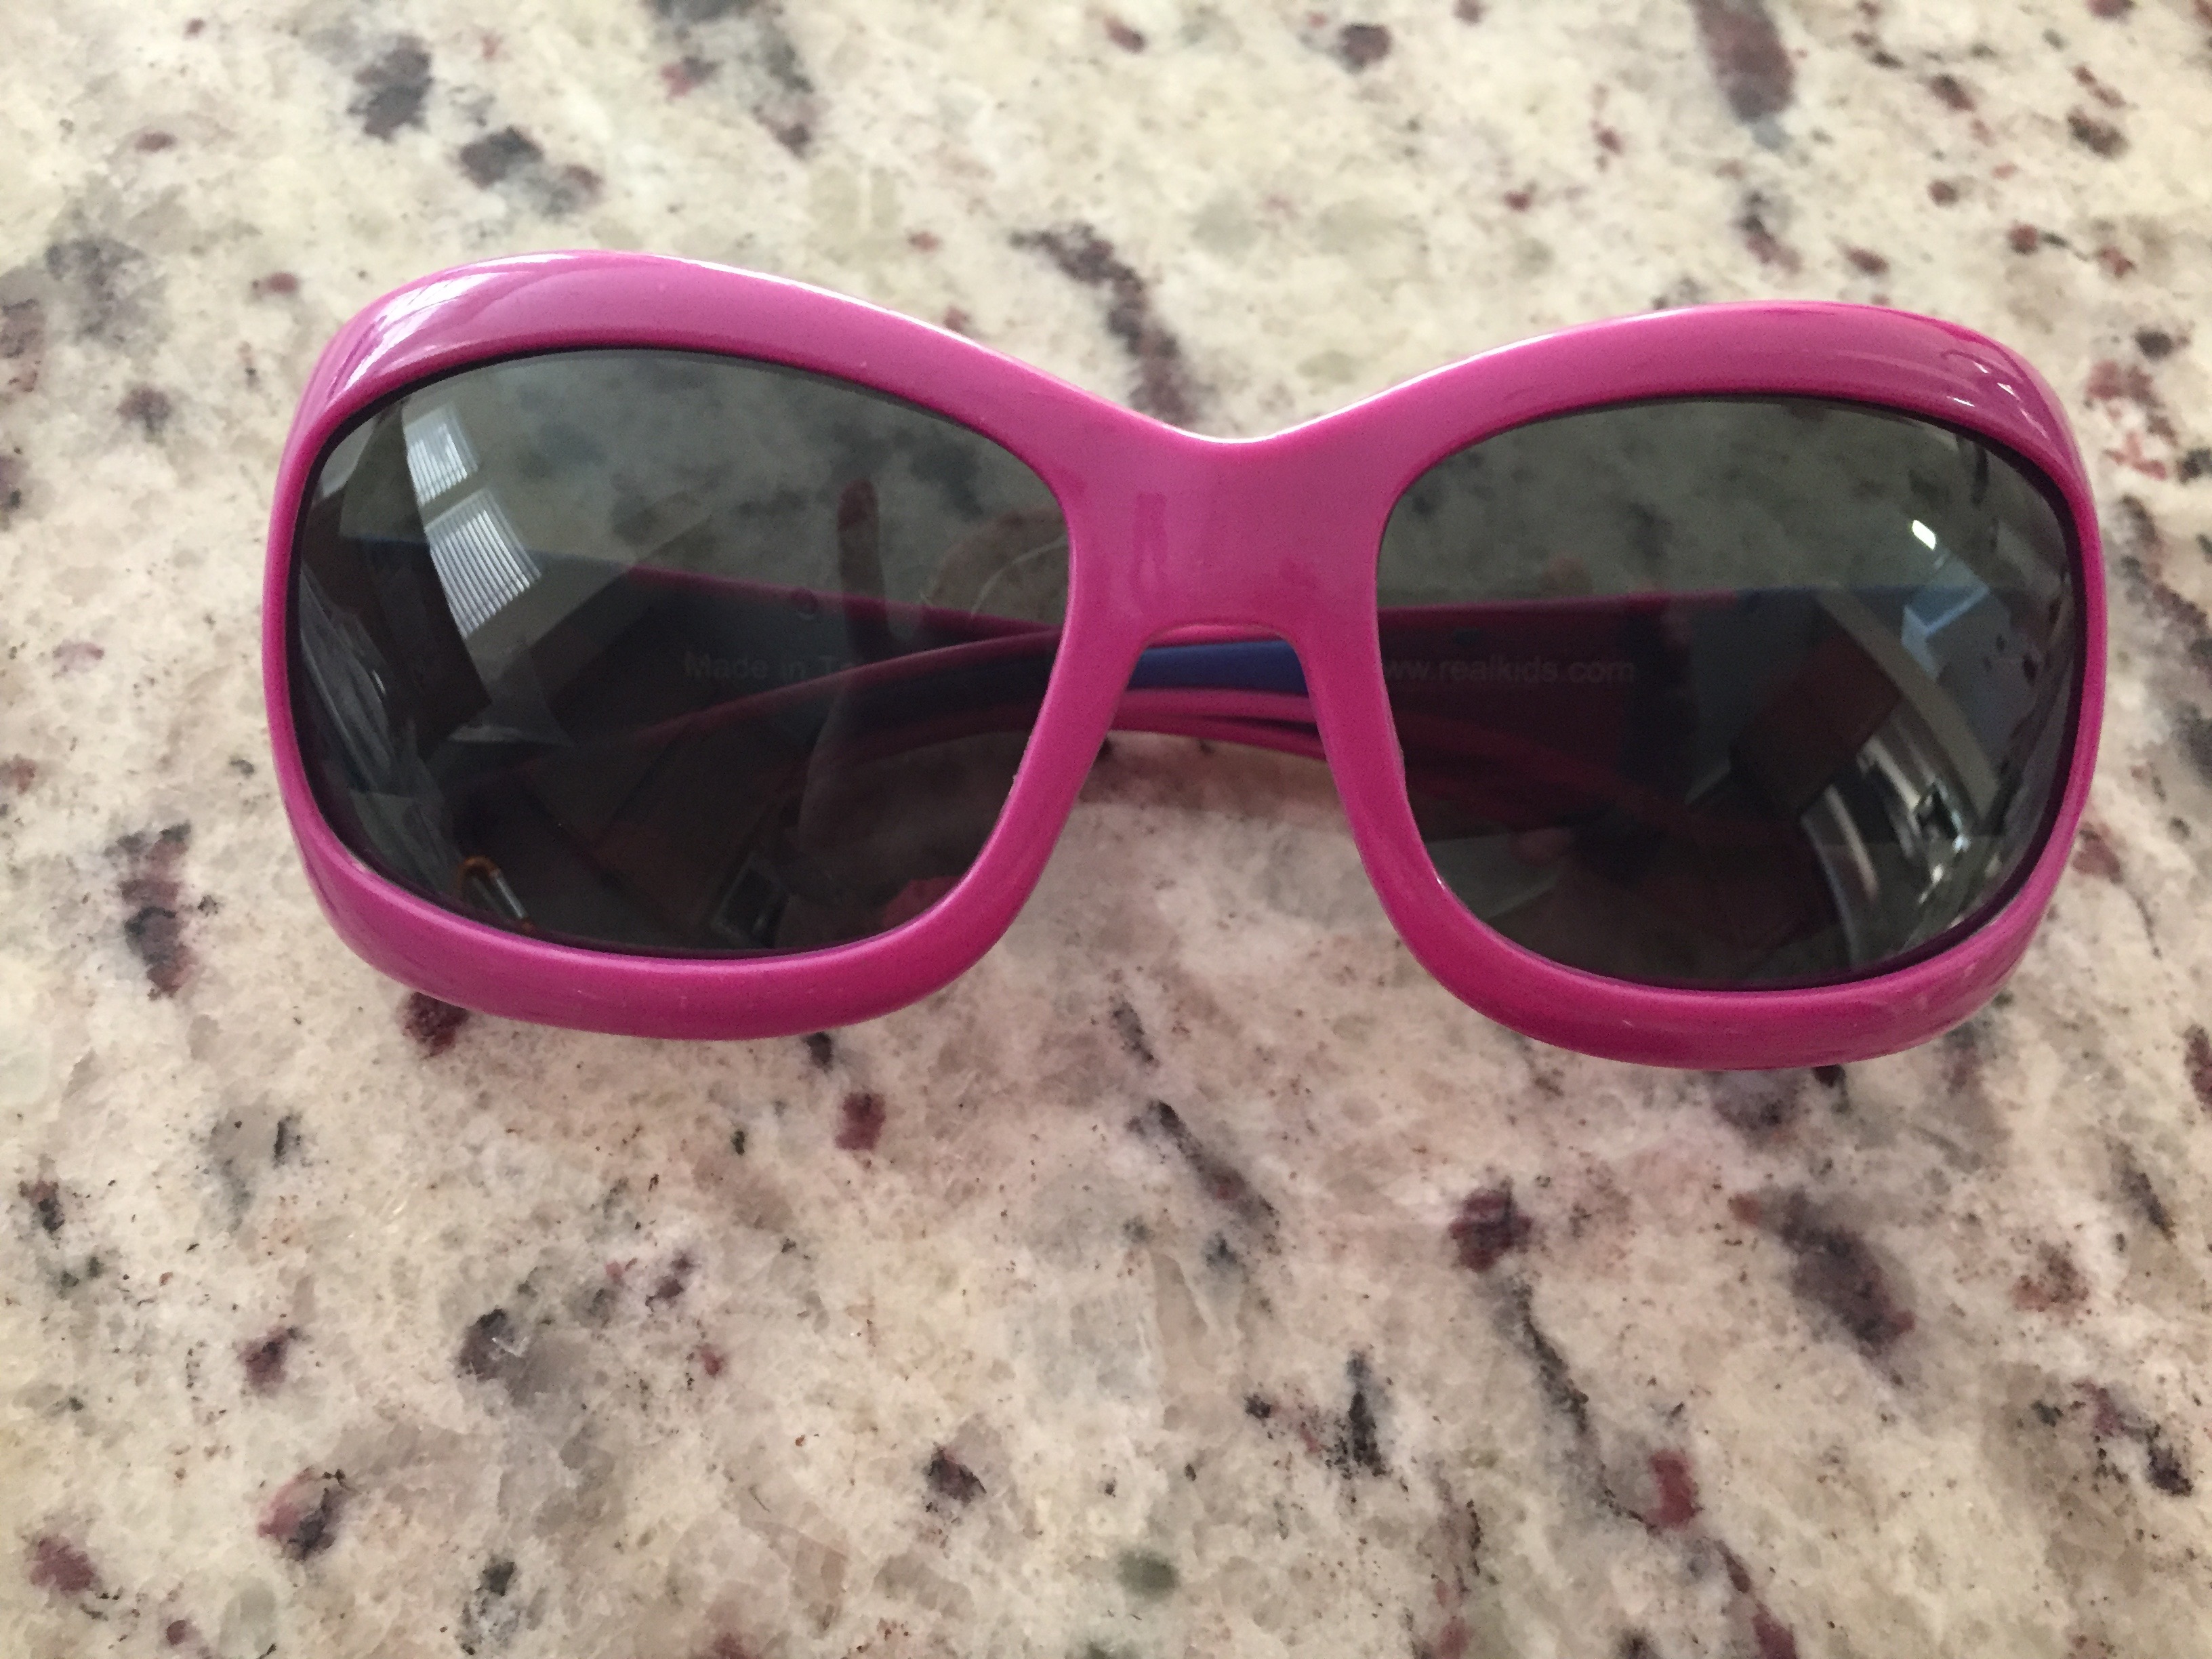 Real Shades Storm Sunglasses - 100% UVA UVB Protection